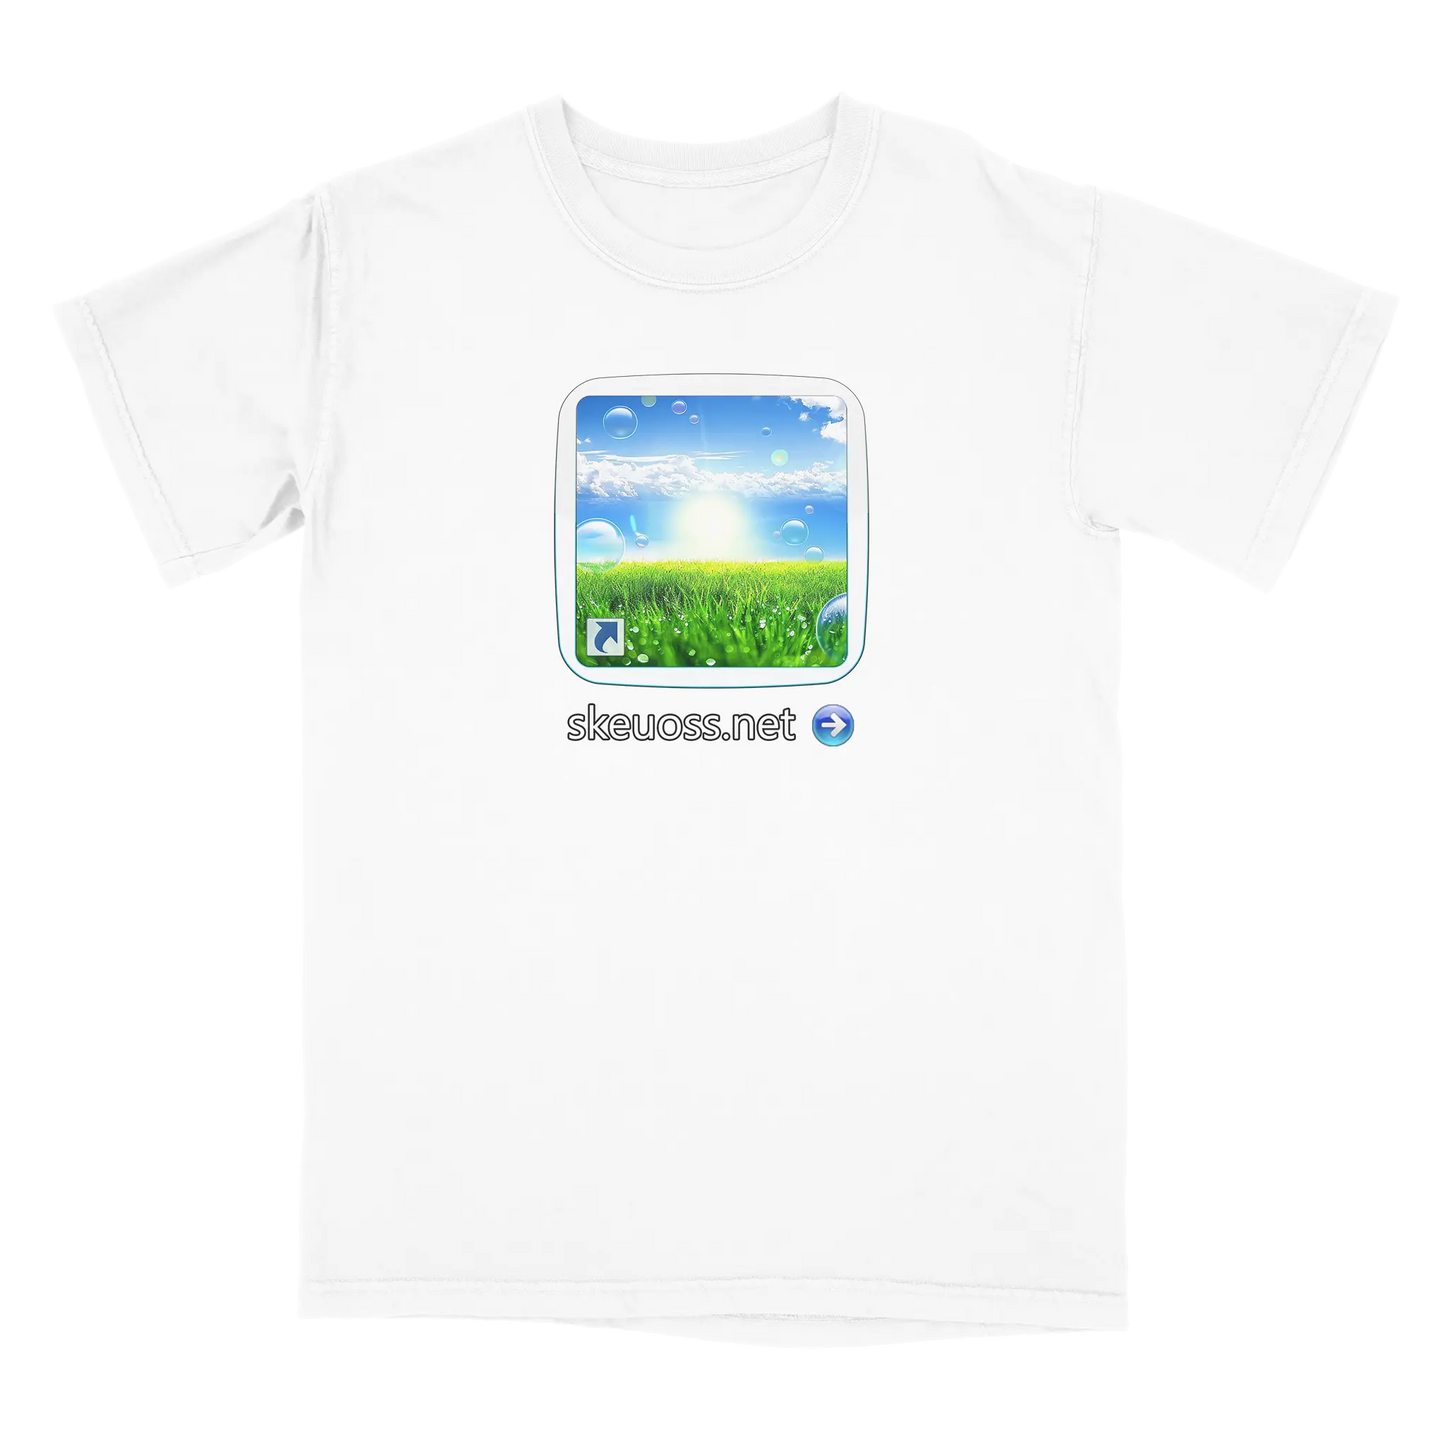 Frutiger Aero T-shirt - User Login Collection - User 279